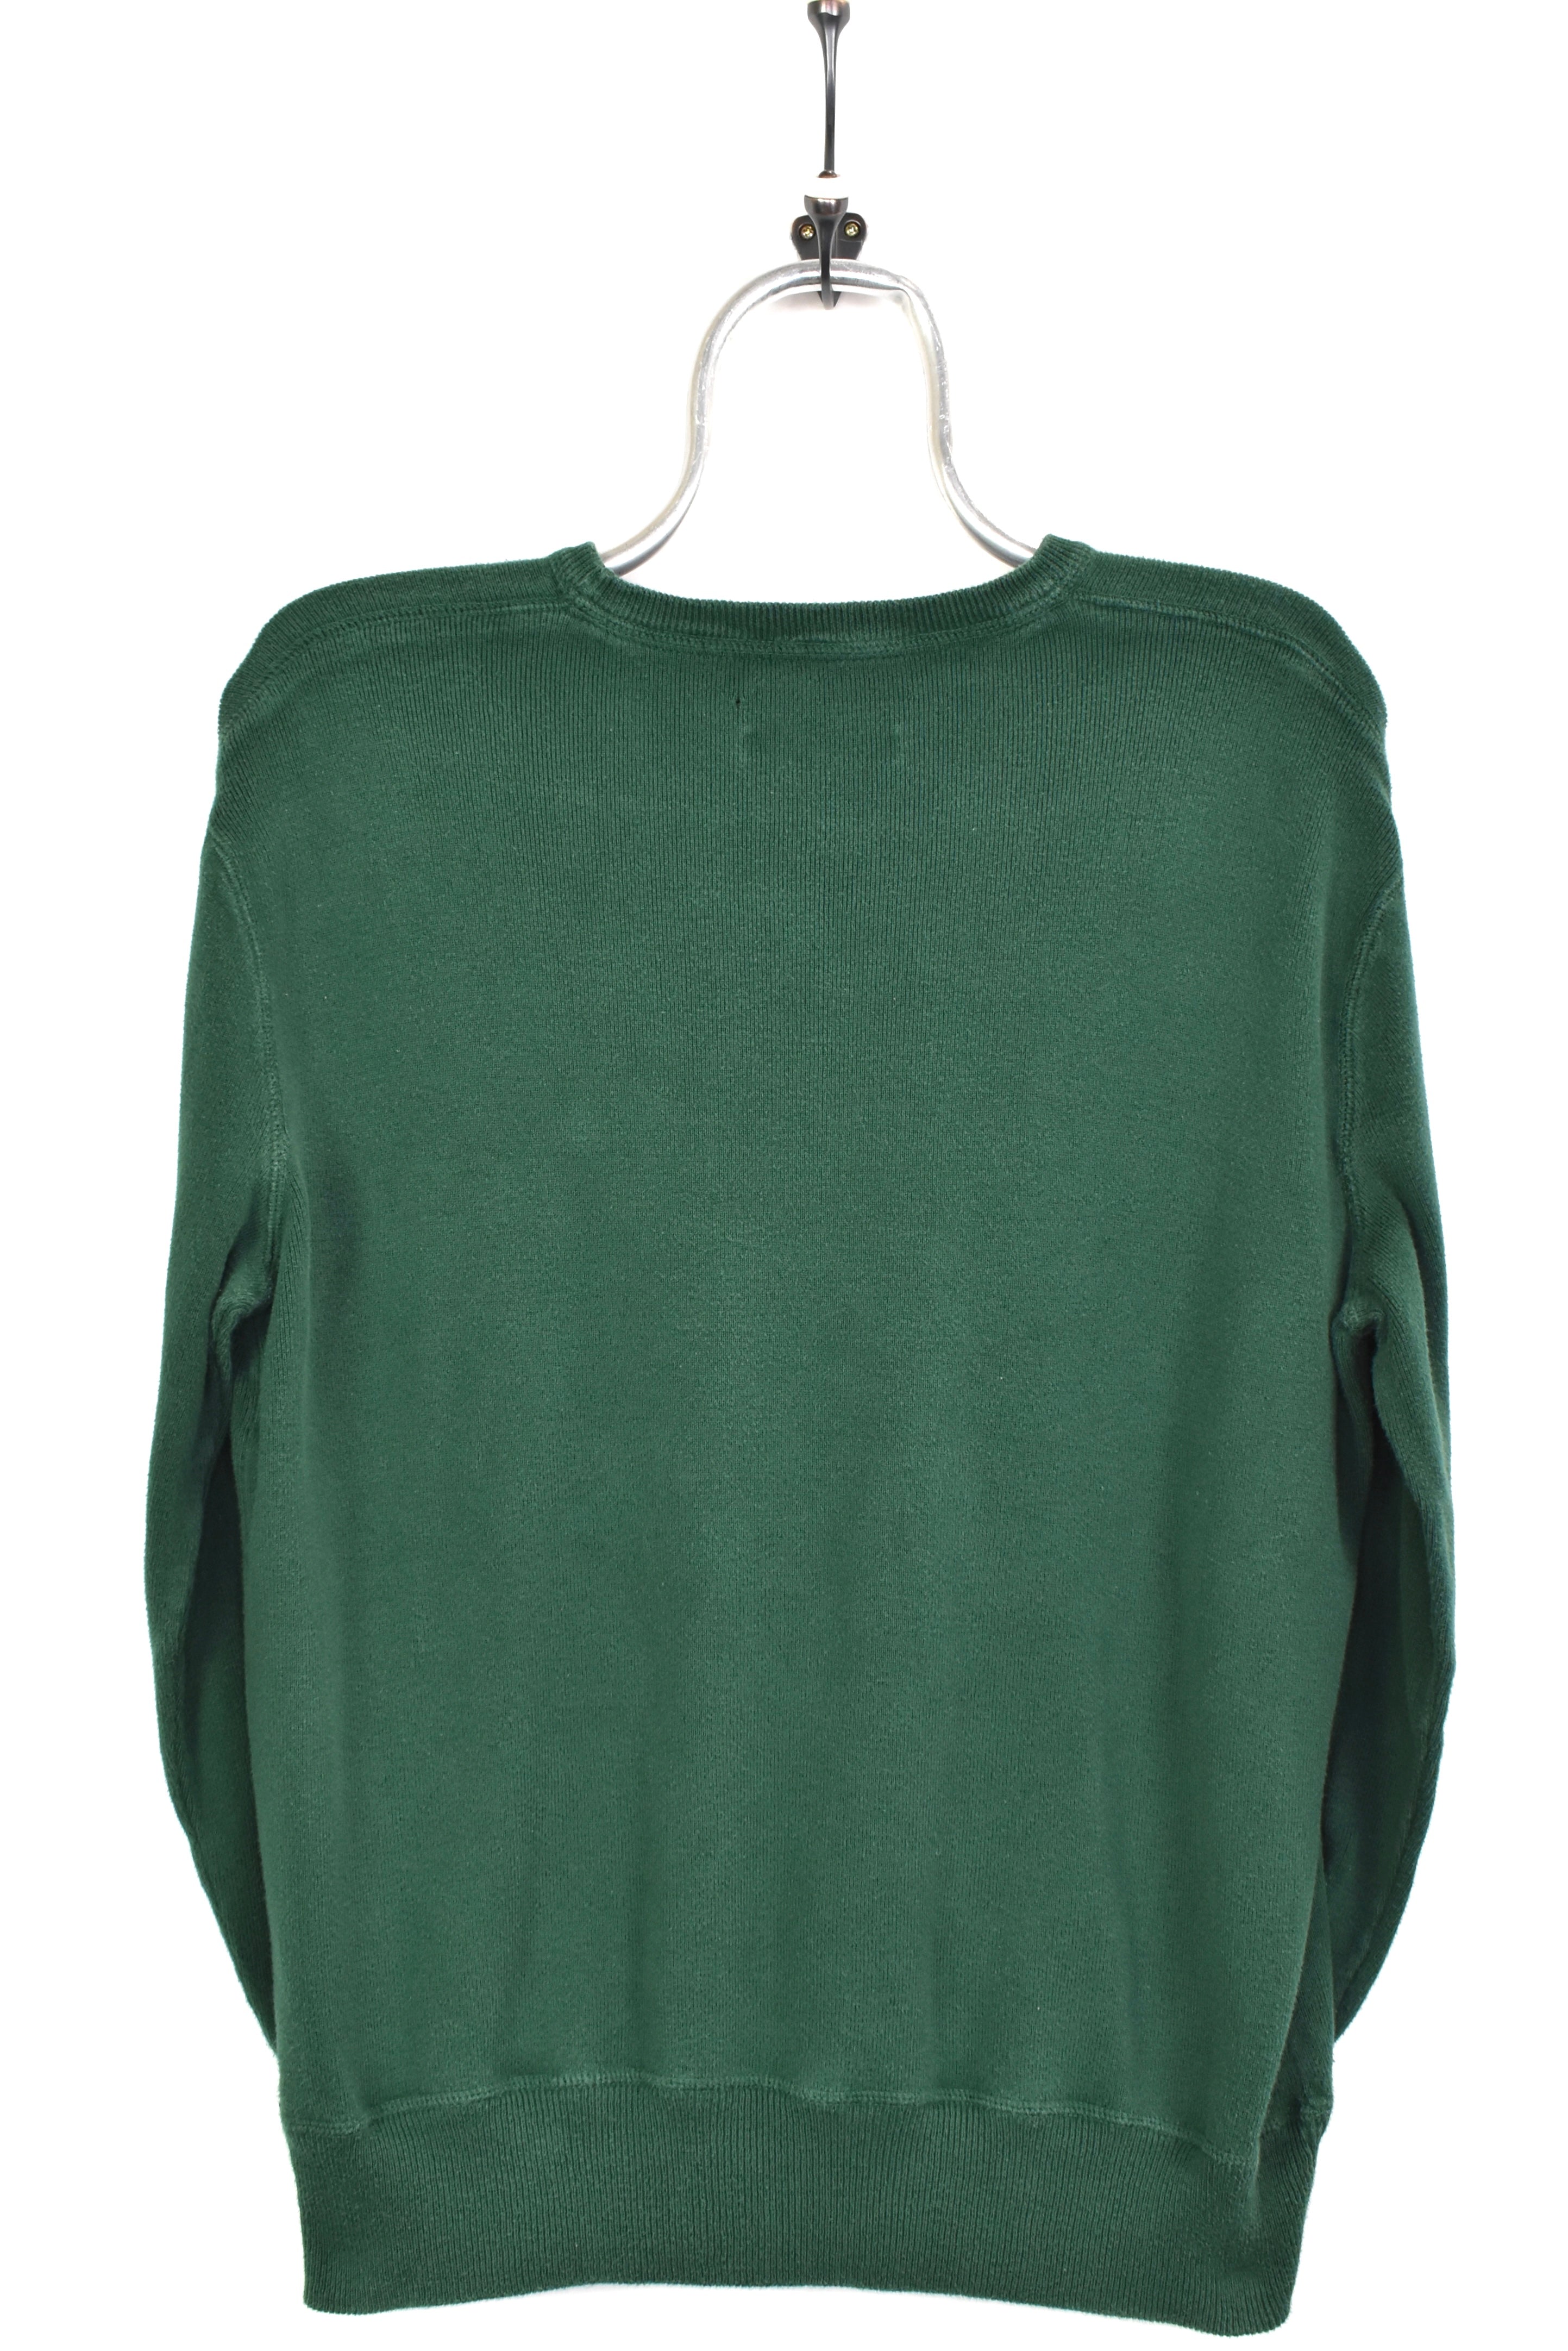 Vintage Ralph Lauren embroidered knit green sweatshirt | Medium RALPH LAUREN